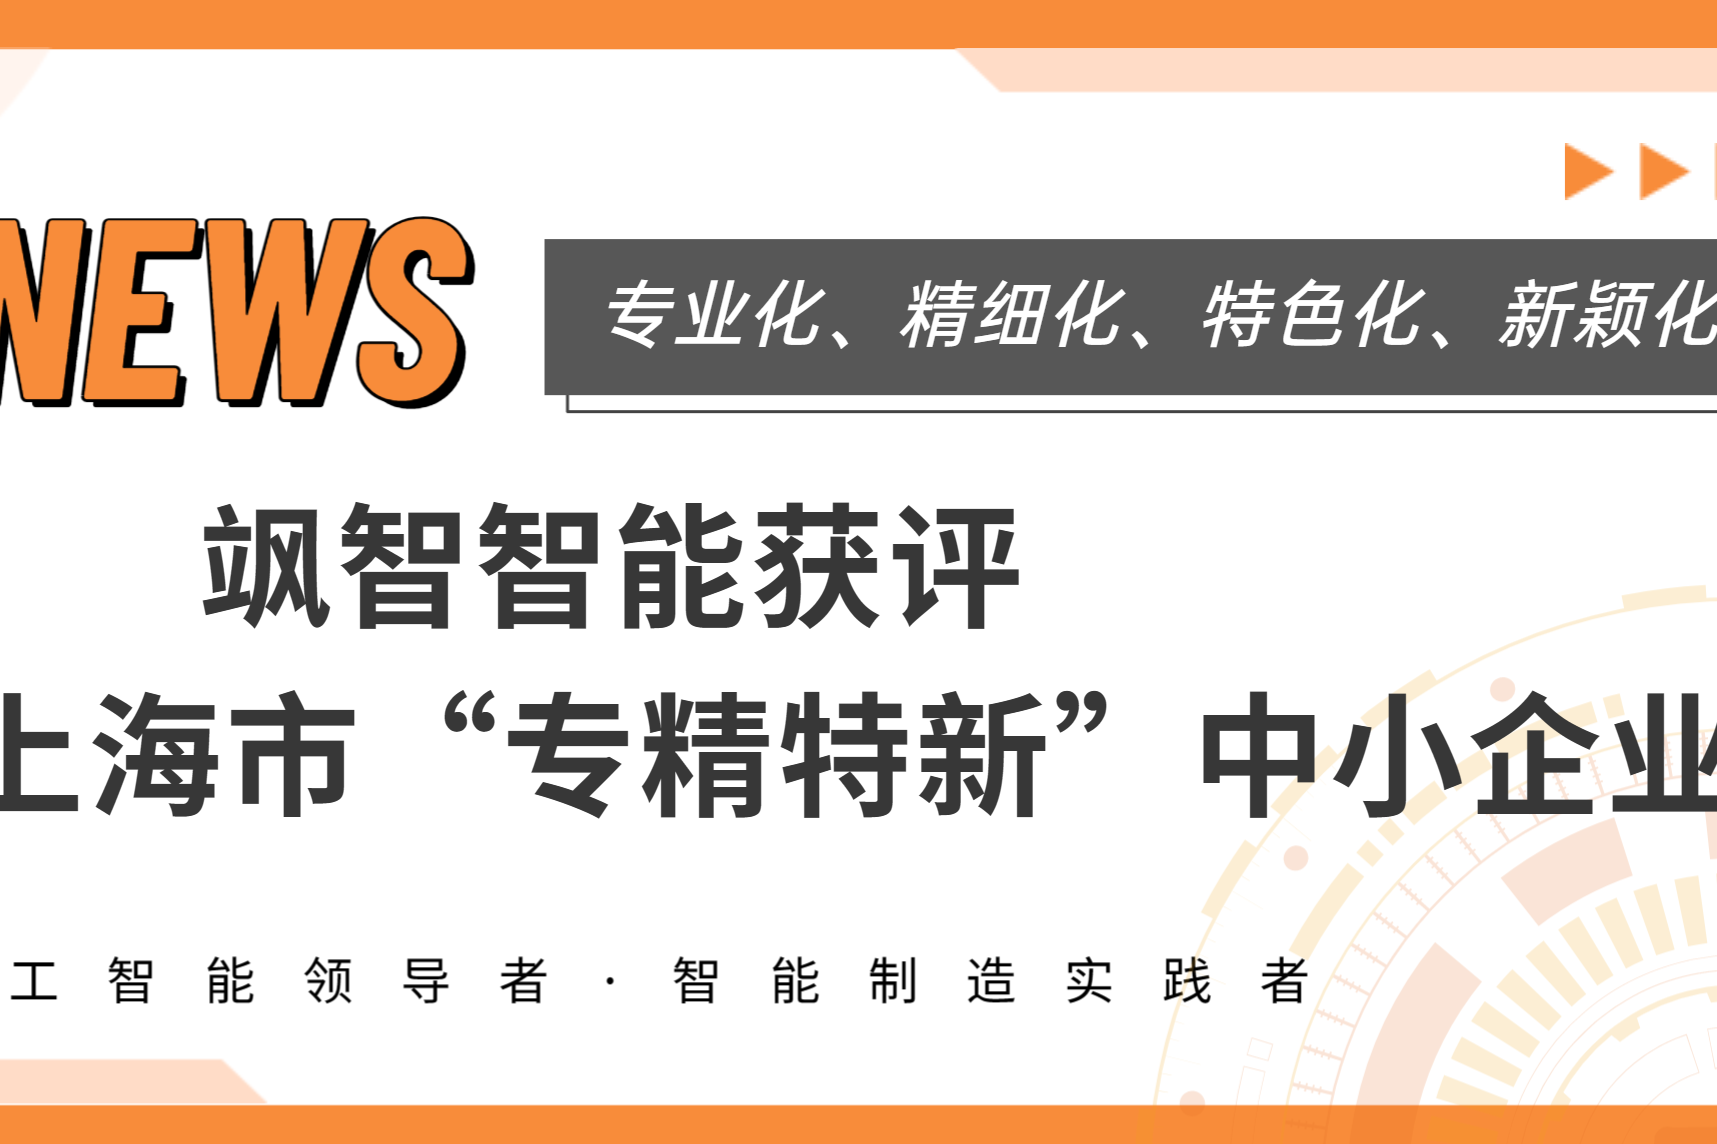  188bet体育登录体育注册获上海市专精特新企业称号！